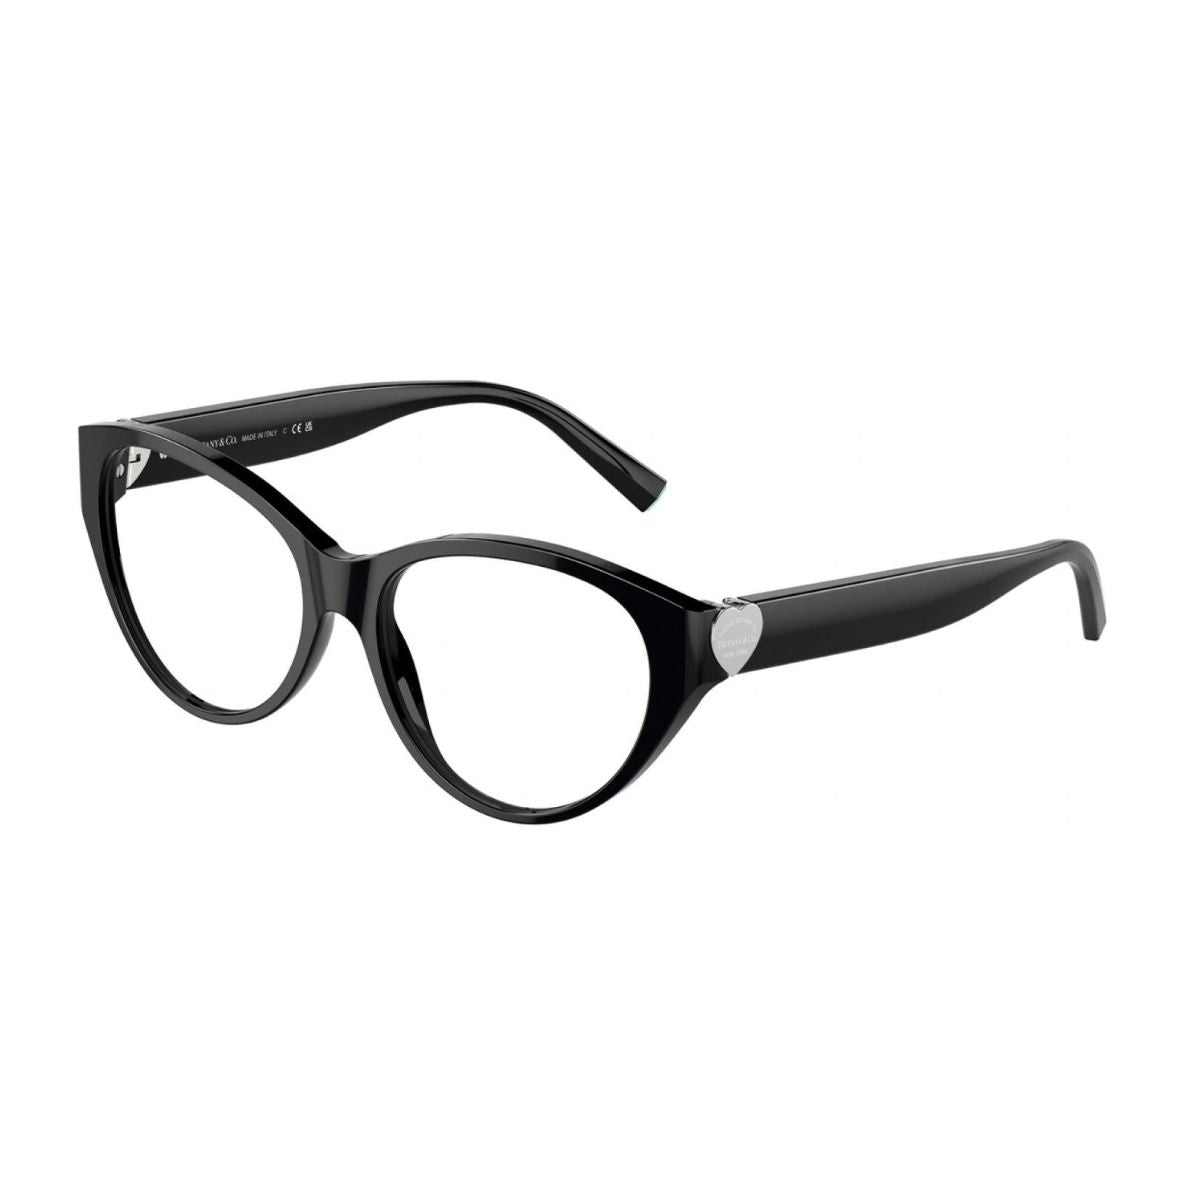 "Shop Tiffany & C0 2244 8001 Rectanglur Glasses Frame For Women's At Optorium"